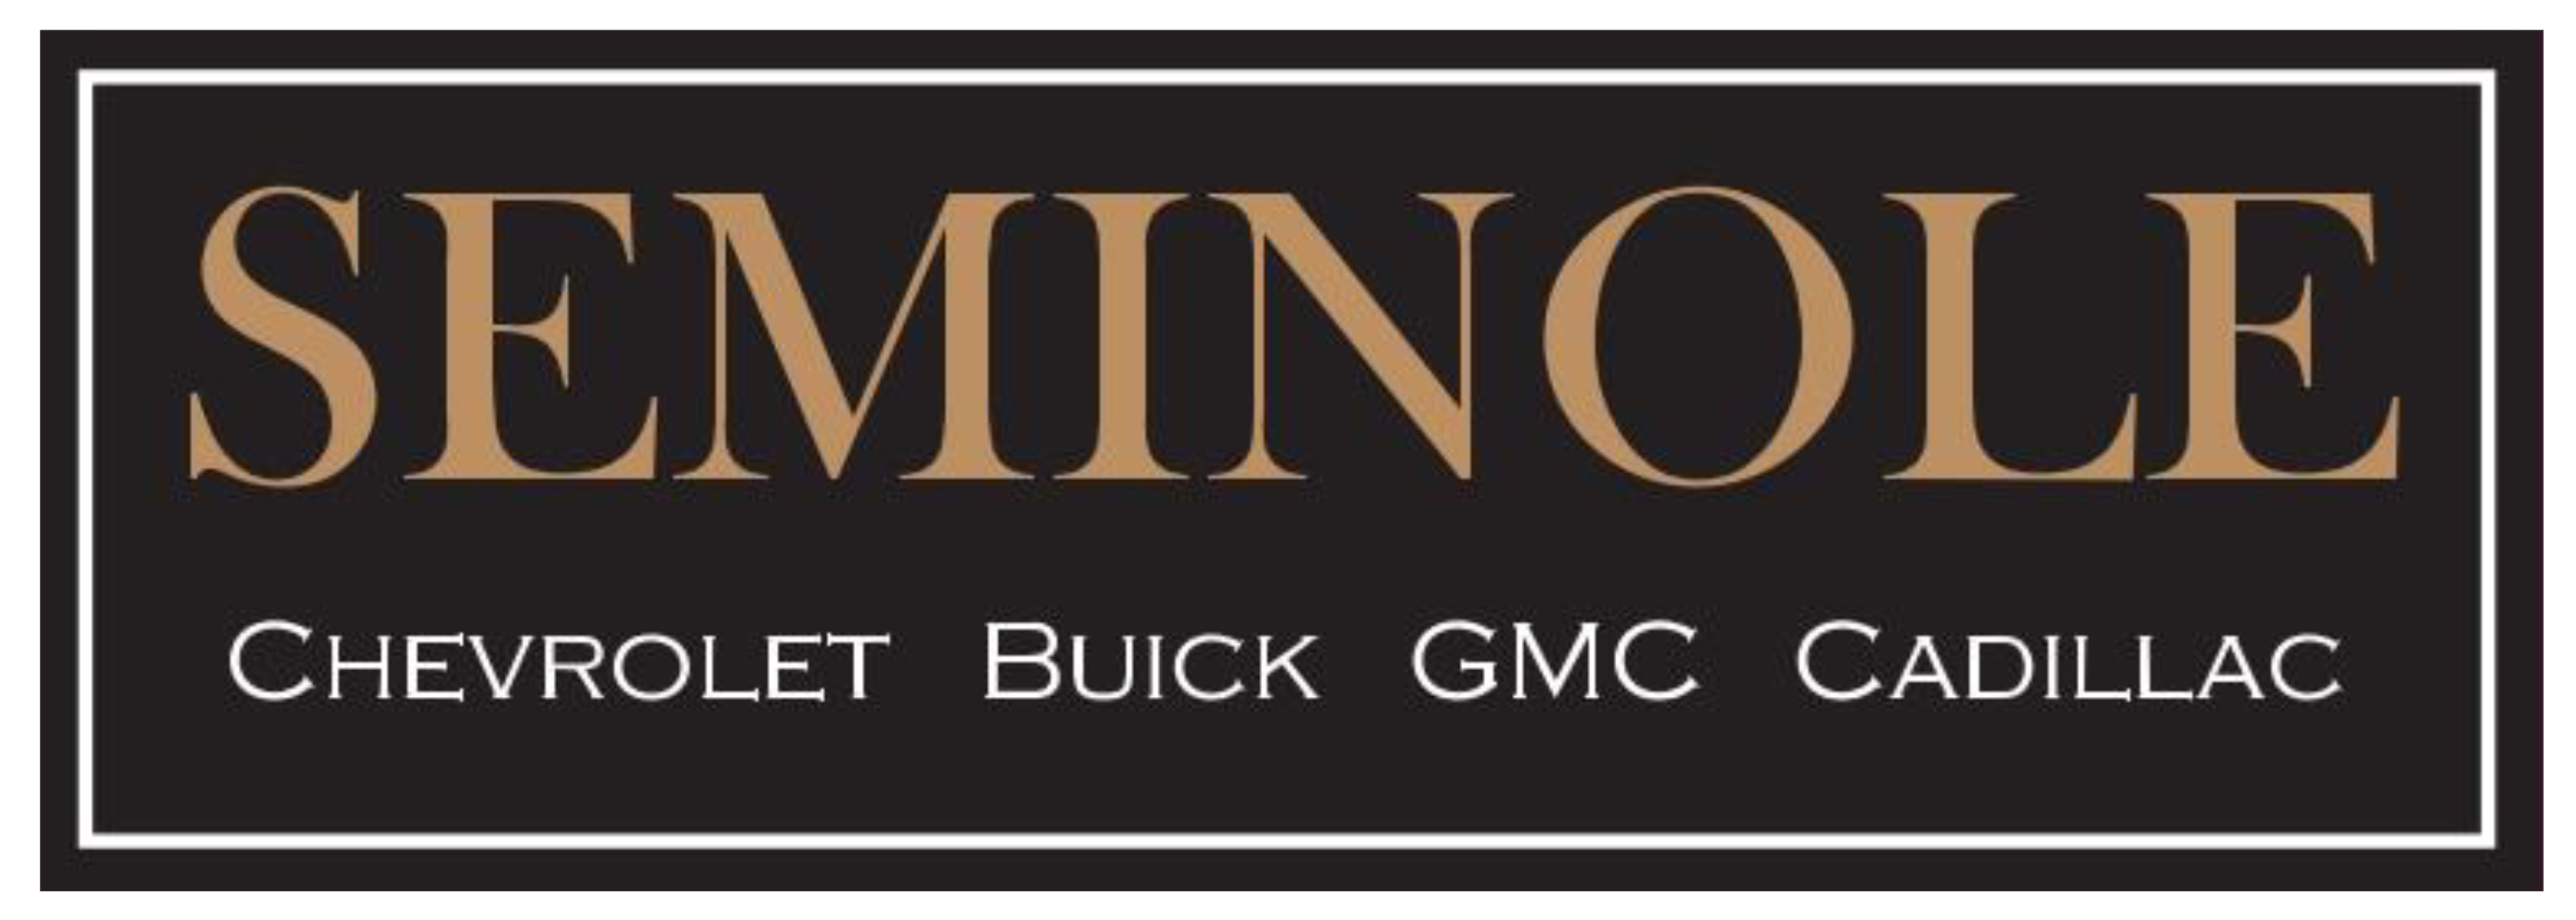 Seminole Chevrolet Buick GMC